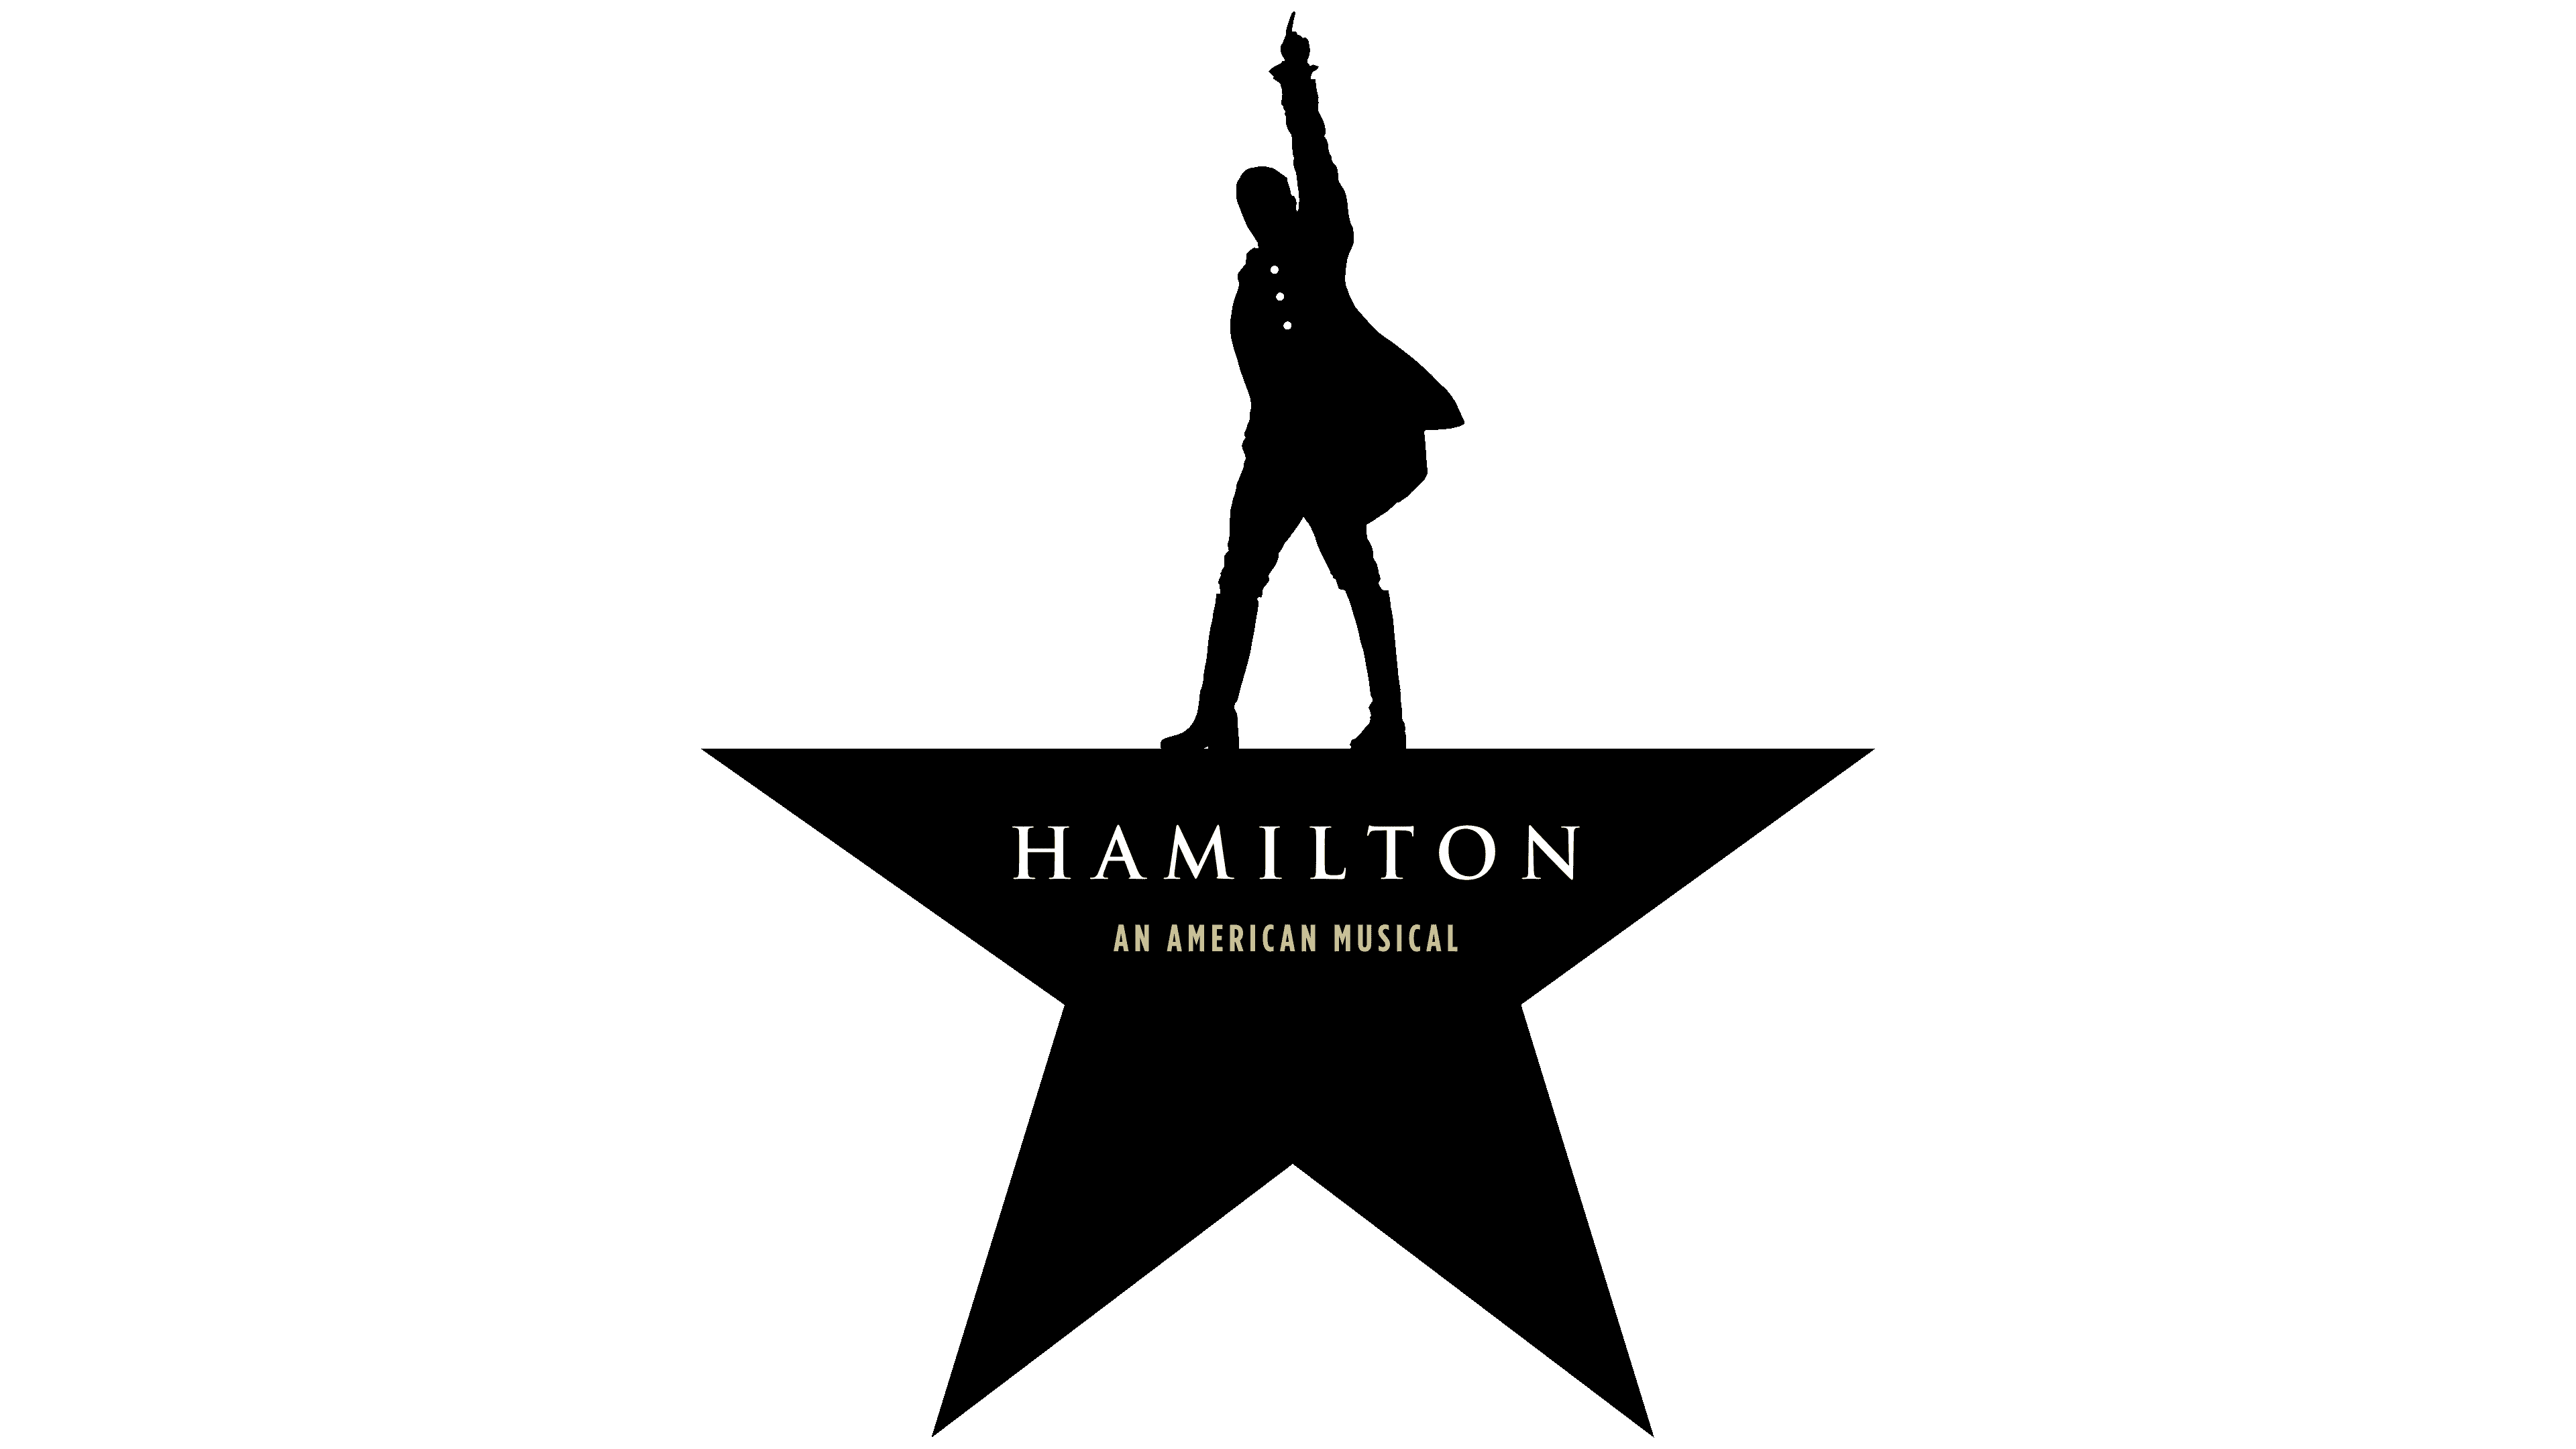 Hamilton popular apps with flutter